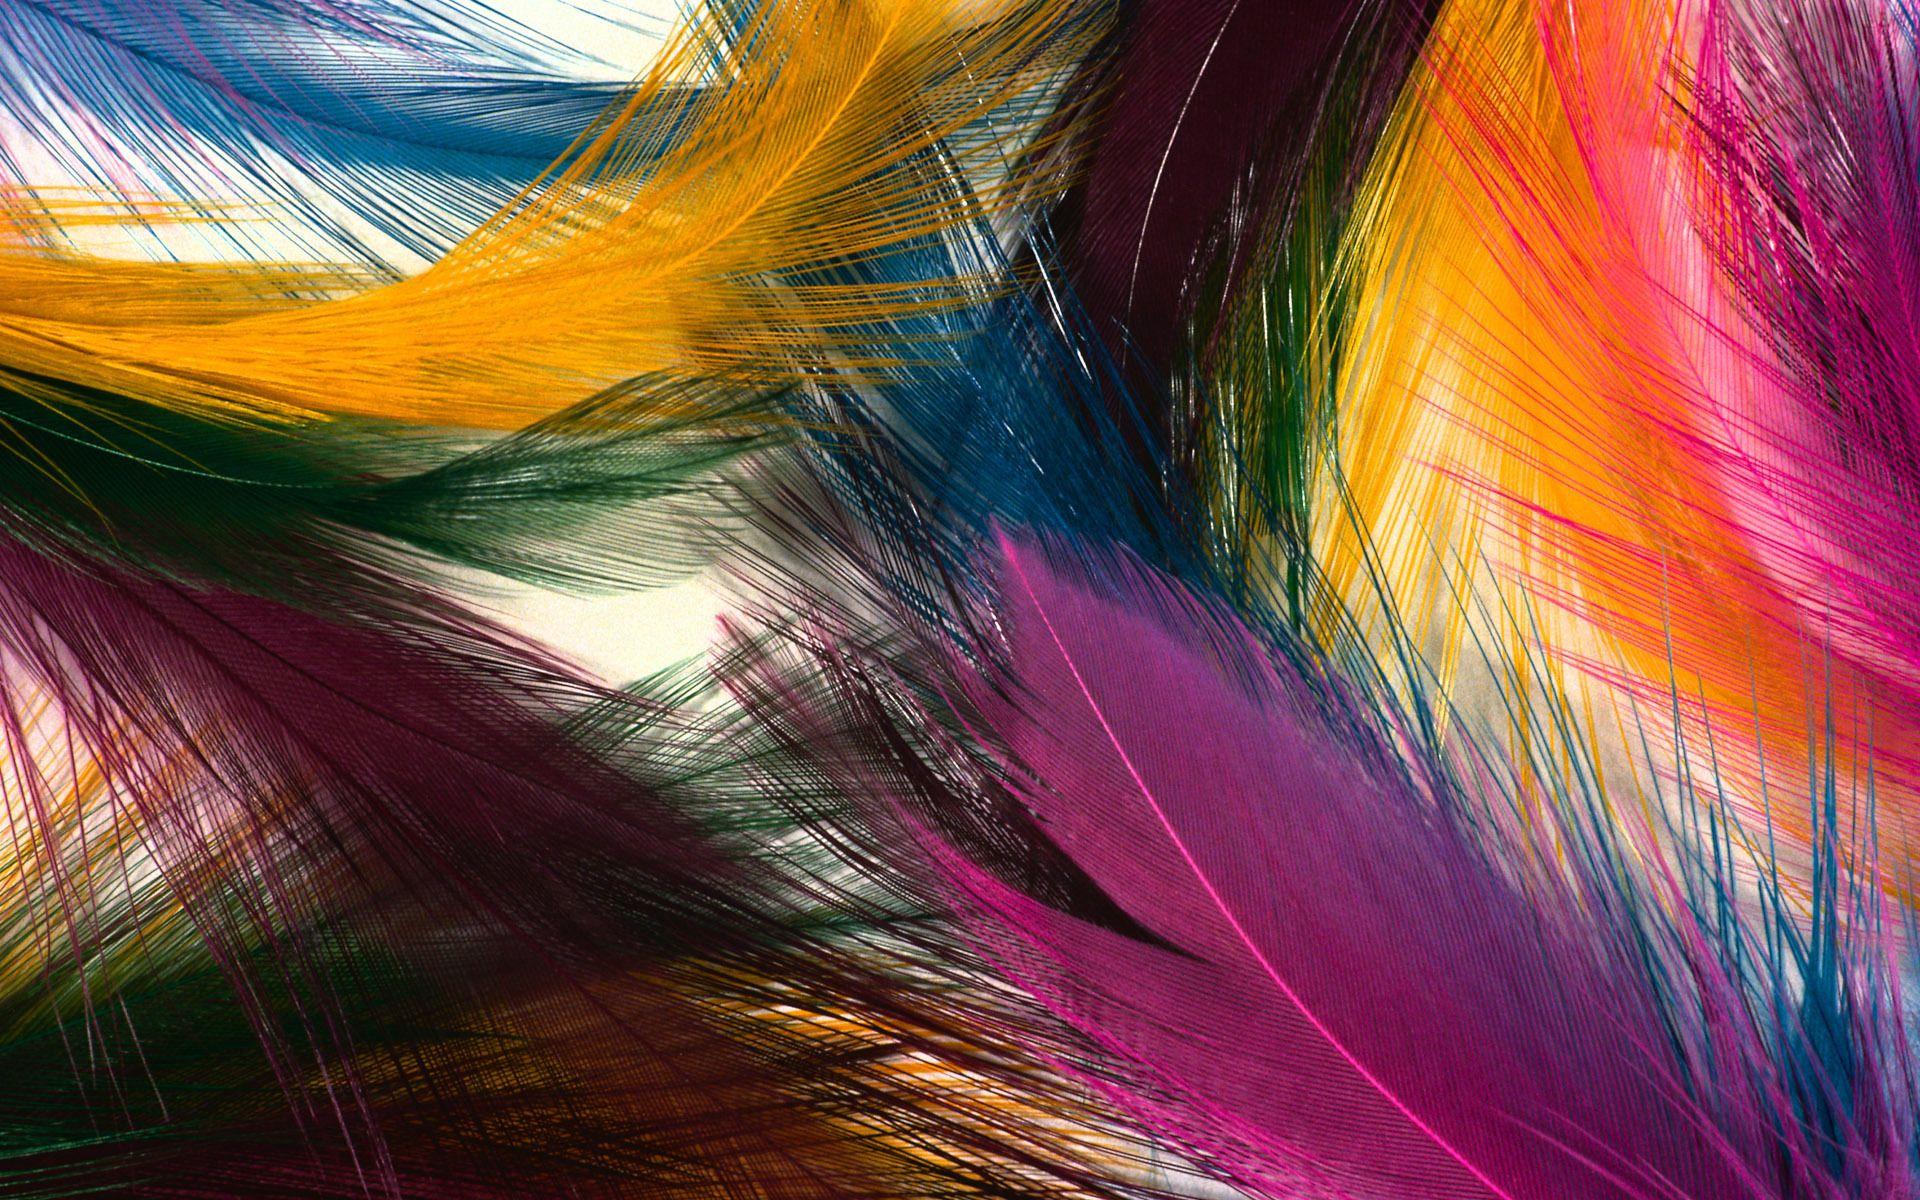 Desktop peacock feather photo dowload